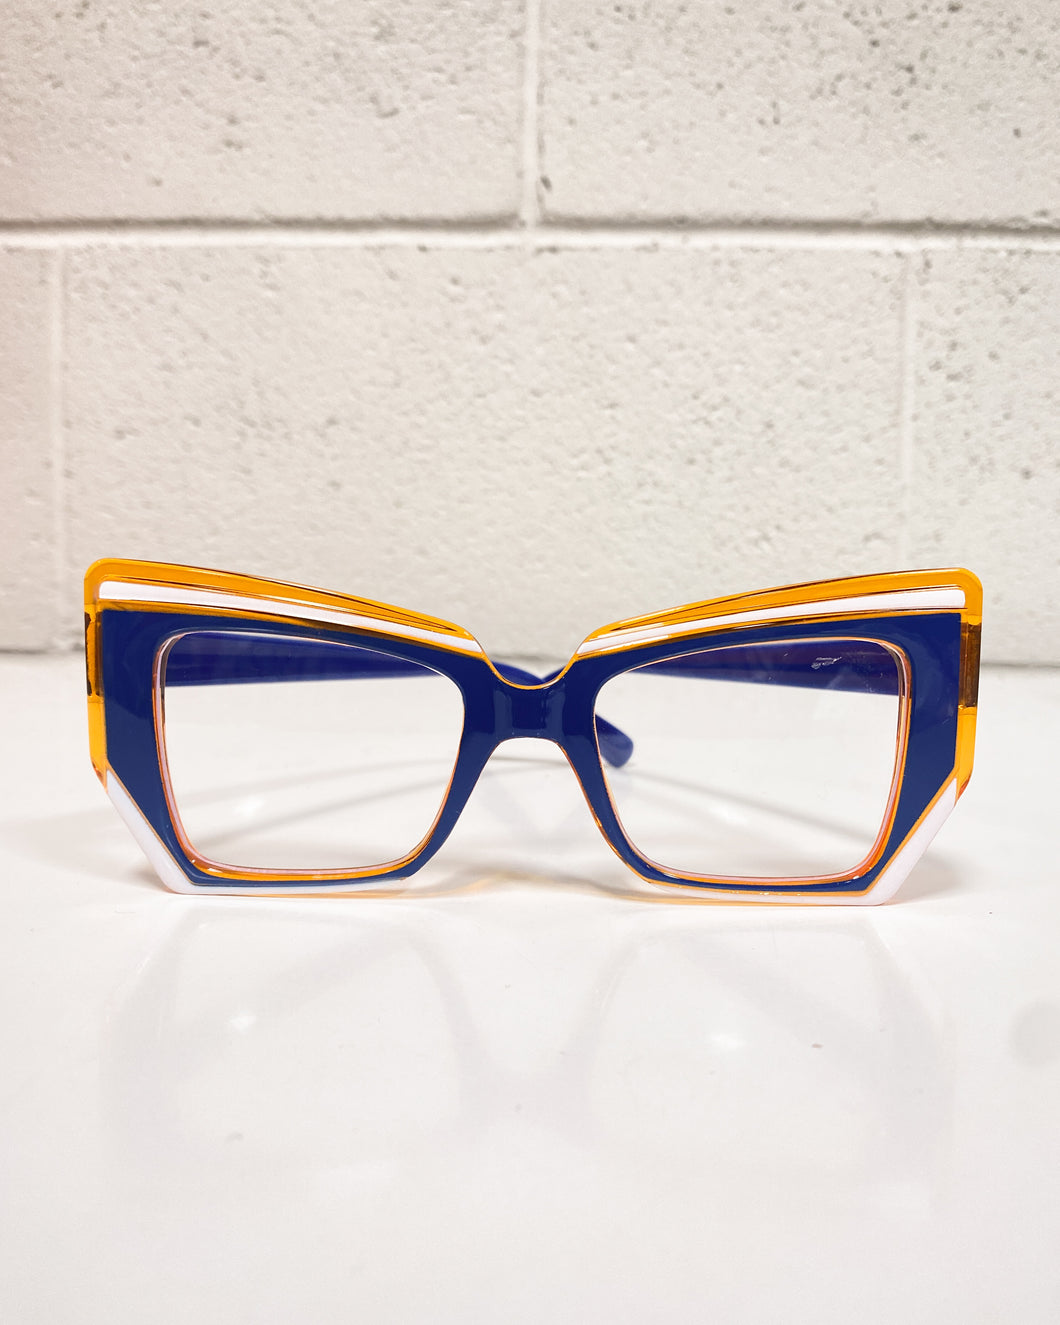 Blue and Orange Glasses